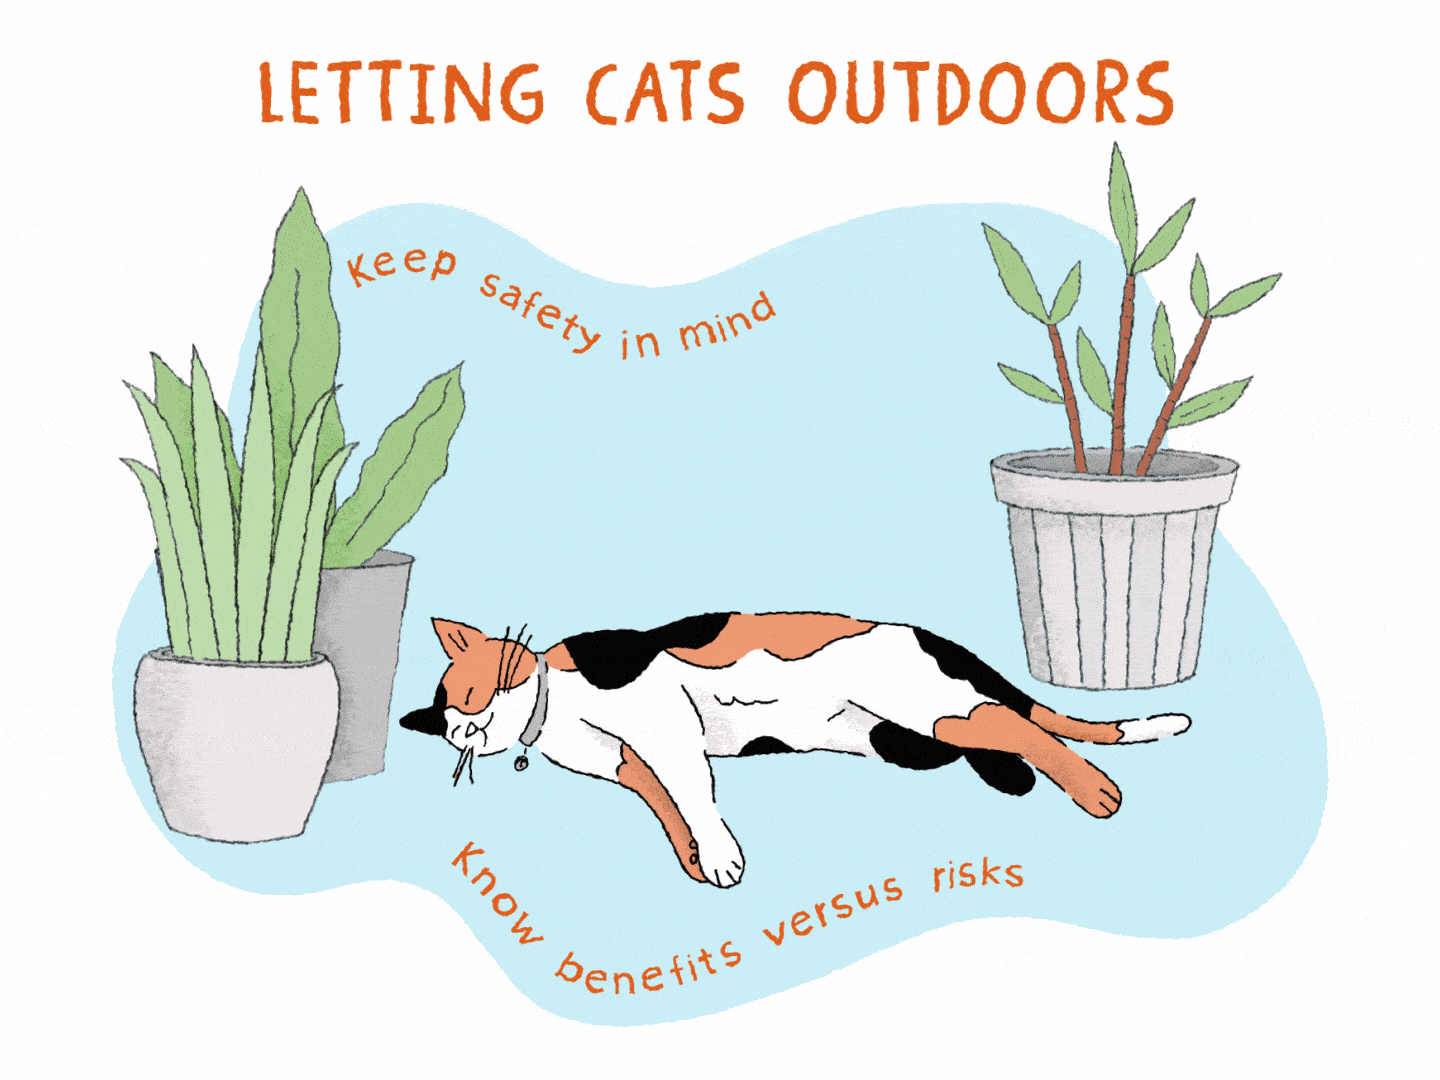 Cat Mental Stimulation - Keep Your Indoor Cat Happy